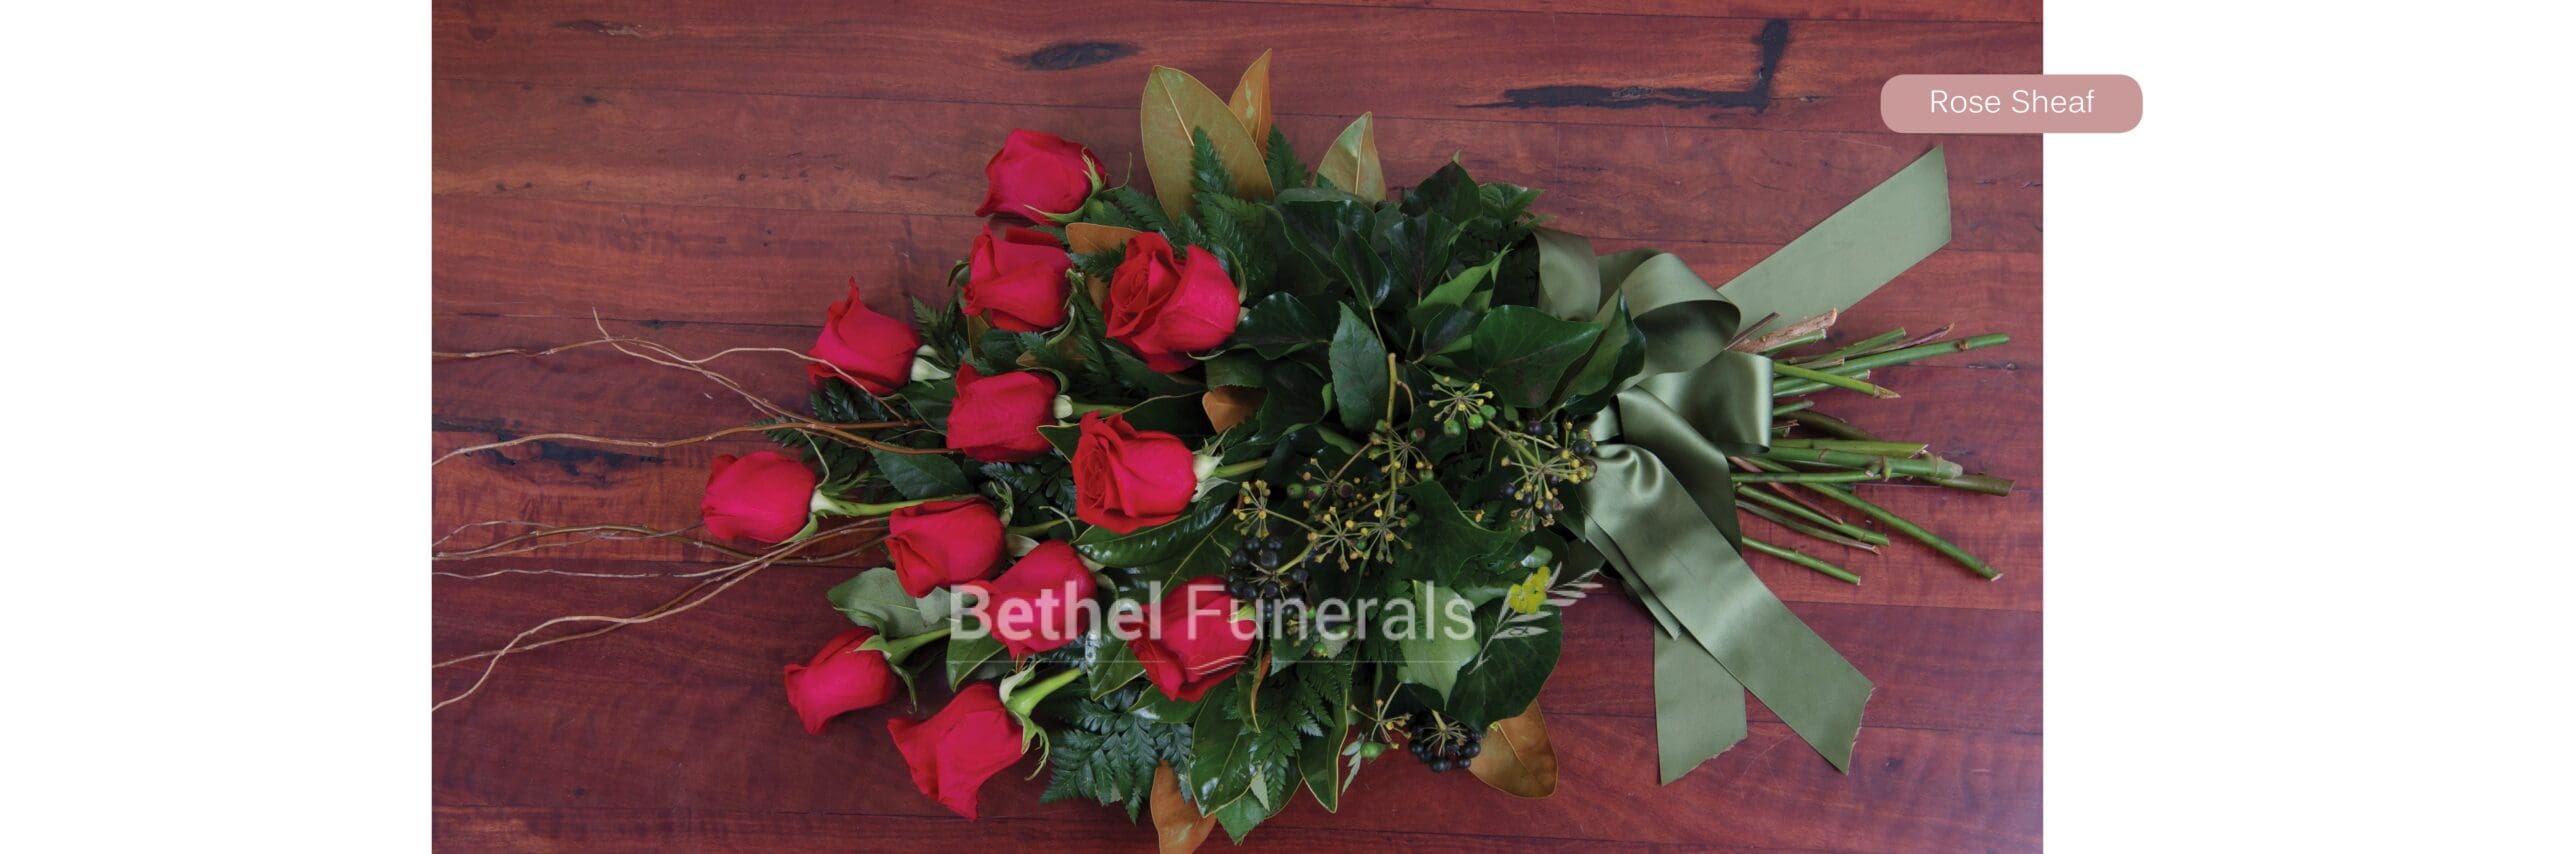 Rose Sheaf funeral flowers